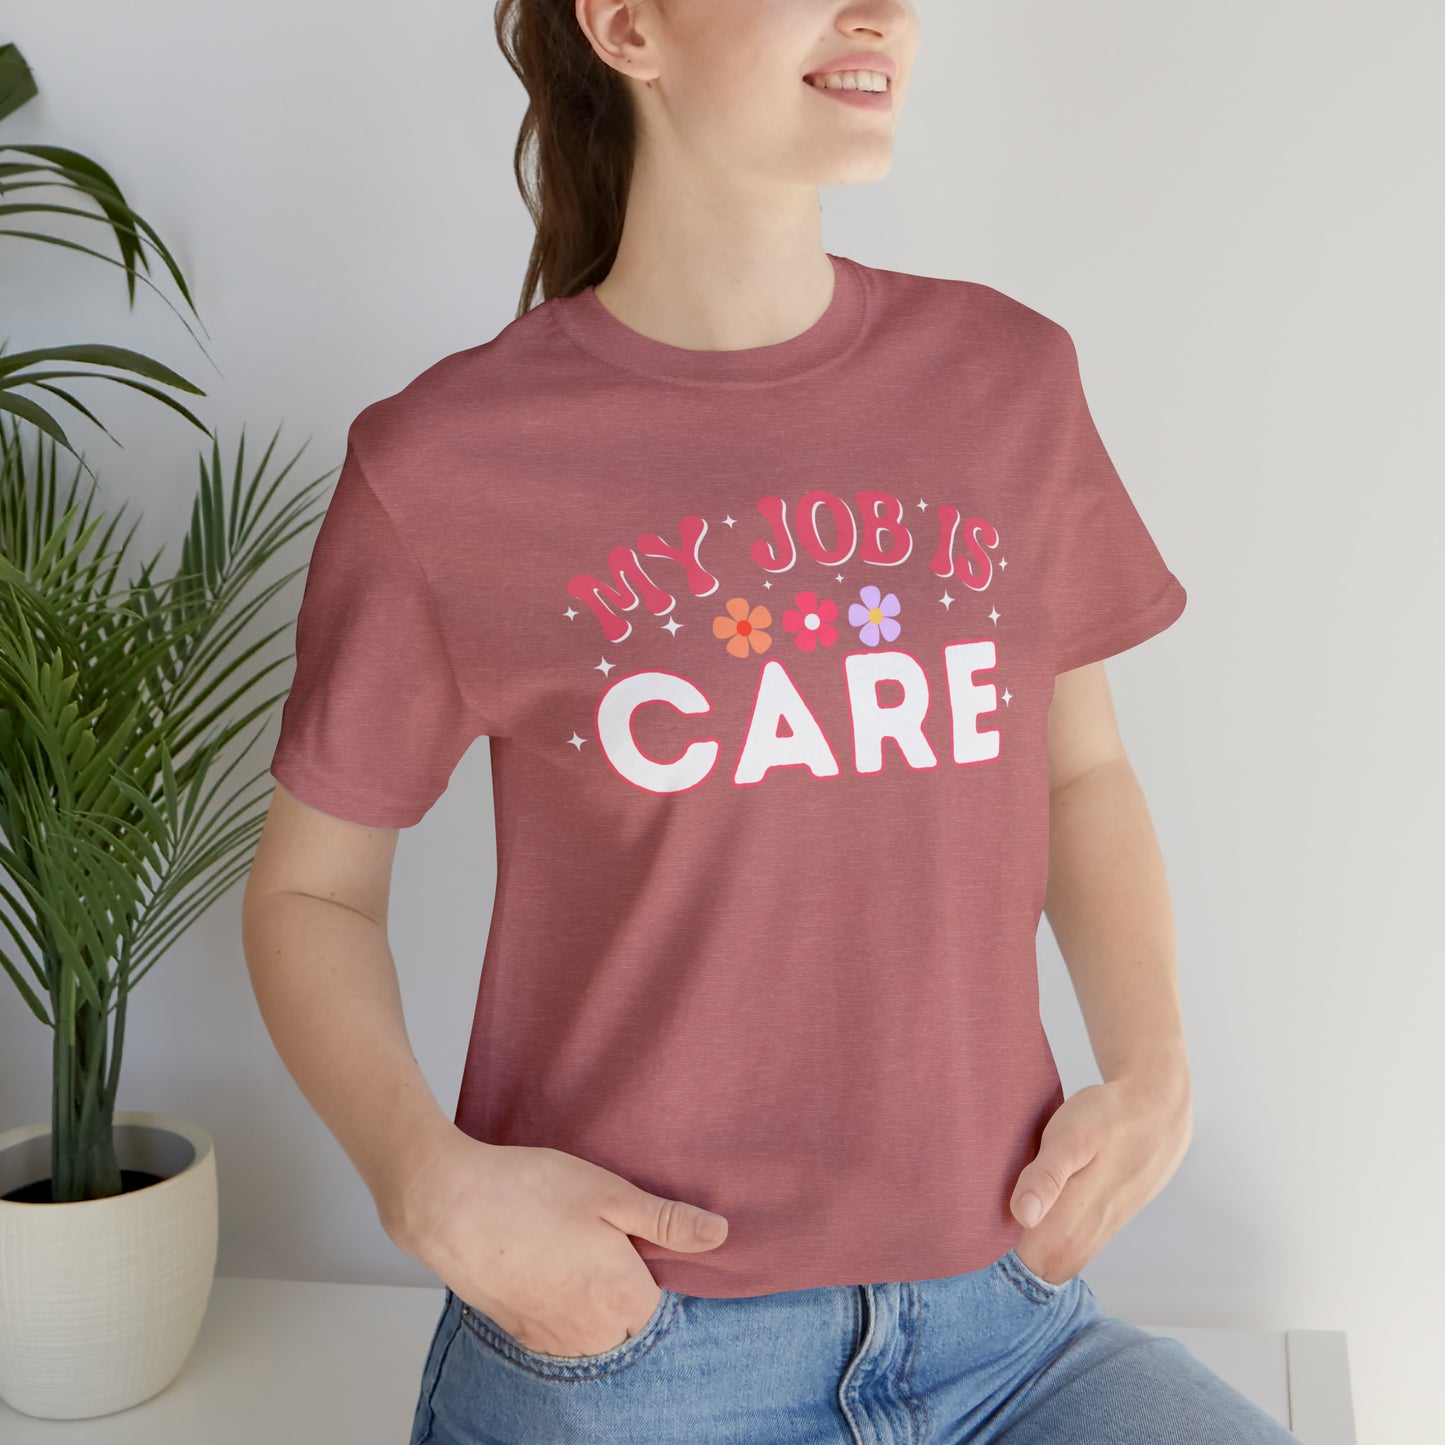 My Job is Care Shirt License Practicing Nurse Shirt, Nurses Assistant Shirt CNA shirt